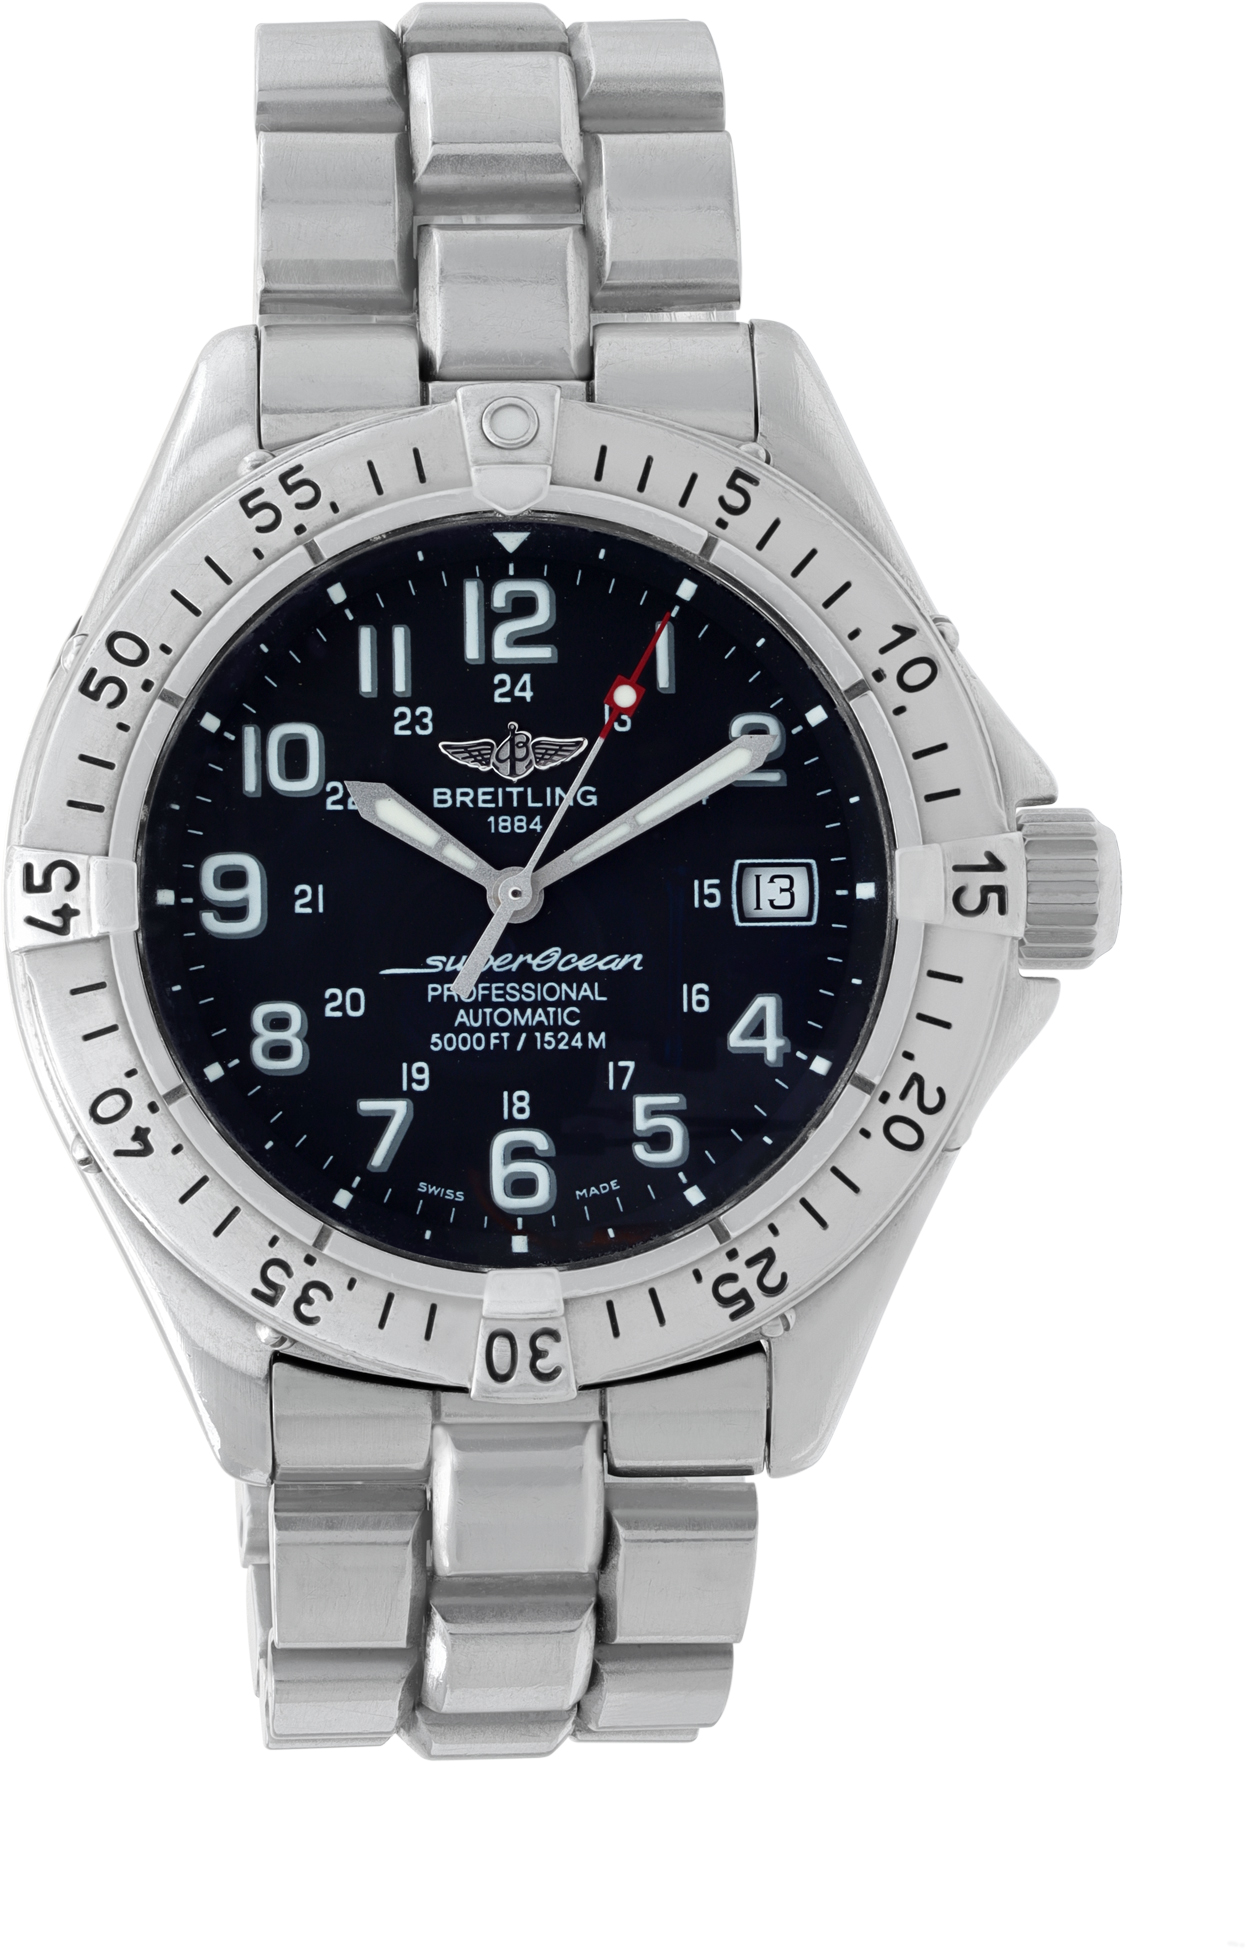 Breitling Super Ocean 41mm a17345 (Watches)